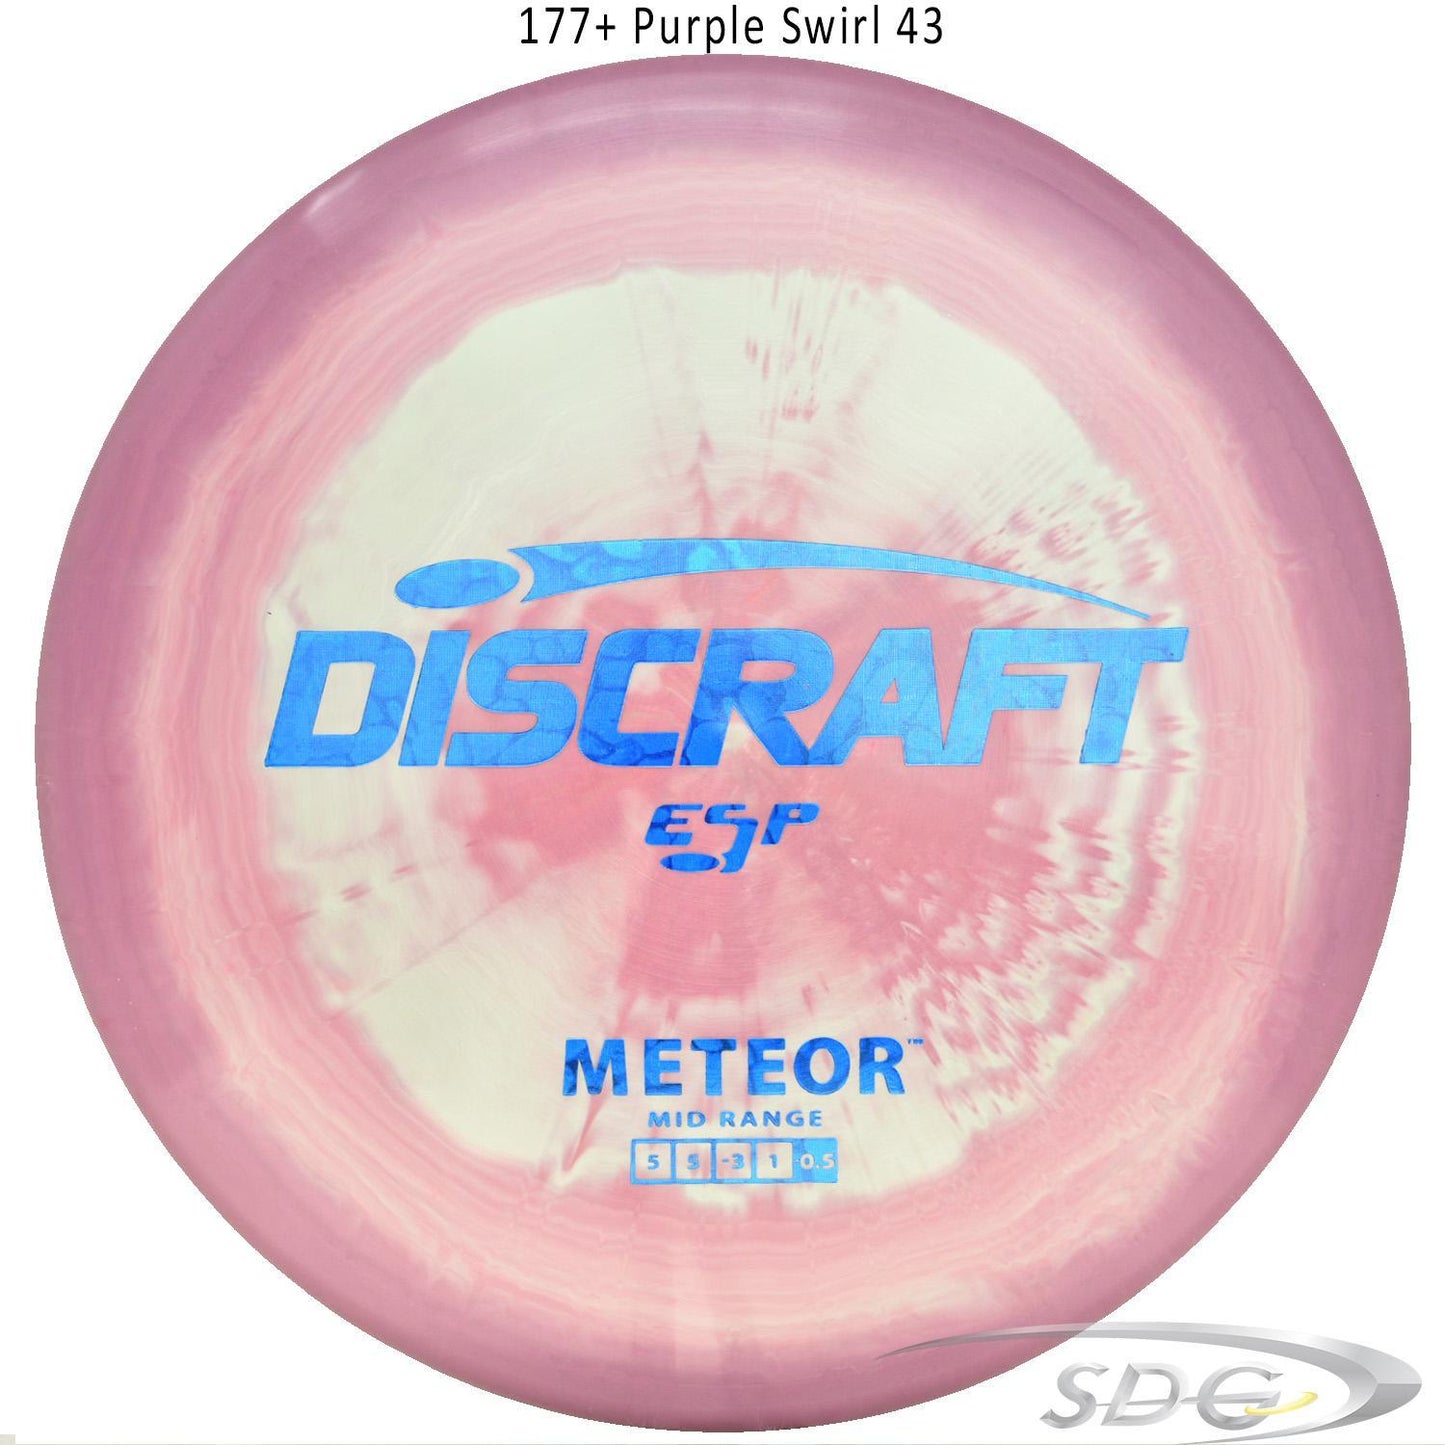 discraft-esp-meteor-disc-golf-mid-range 177+ Purple Swirl 43 